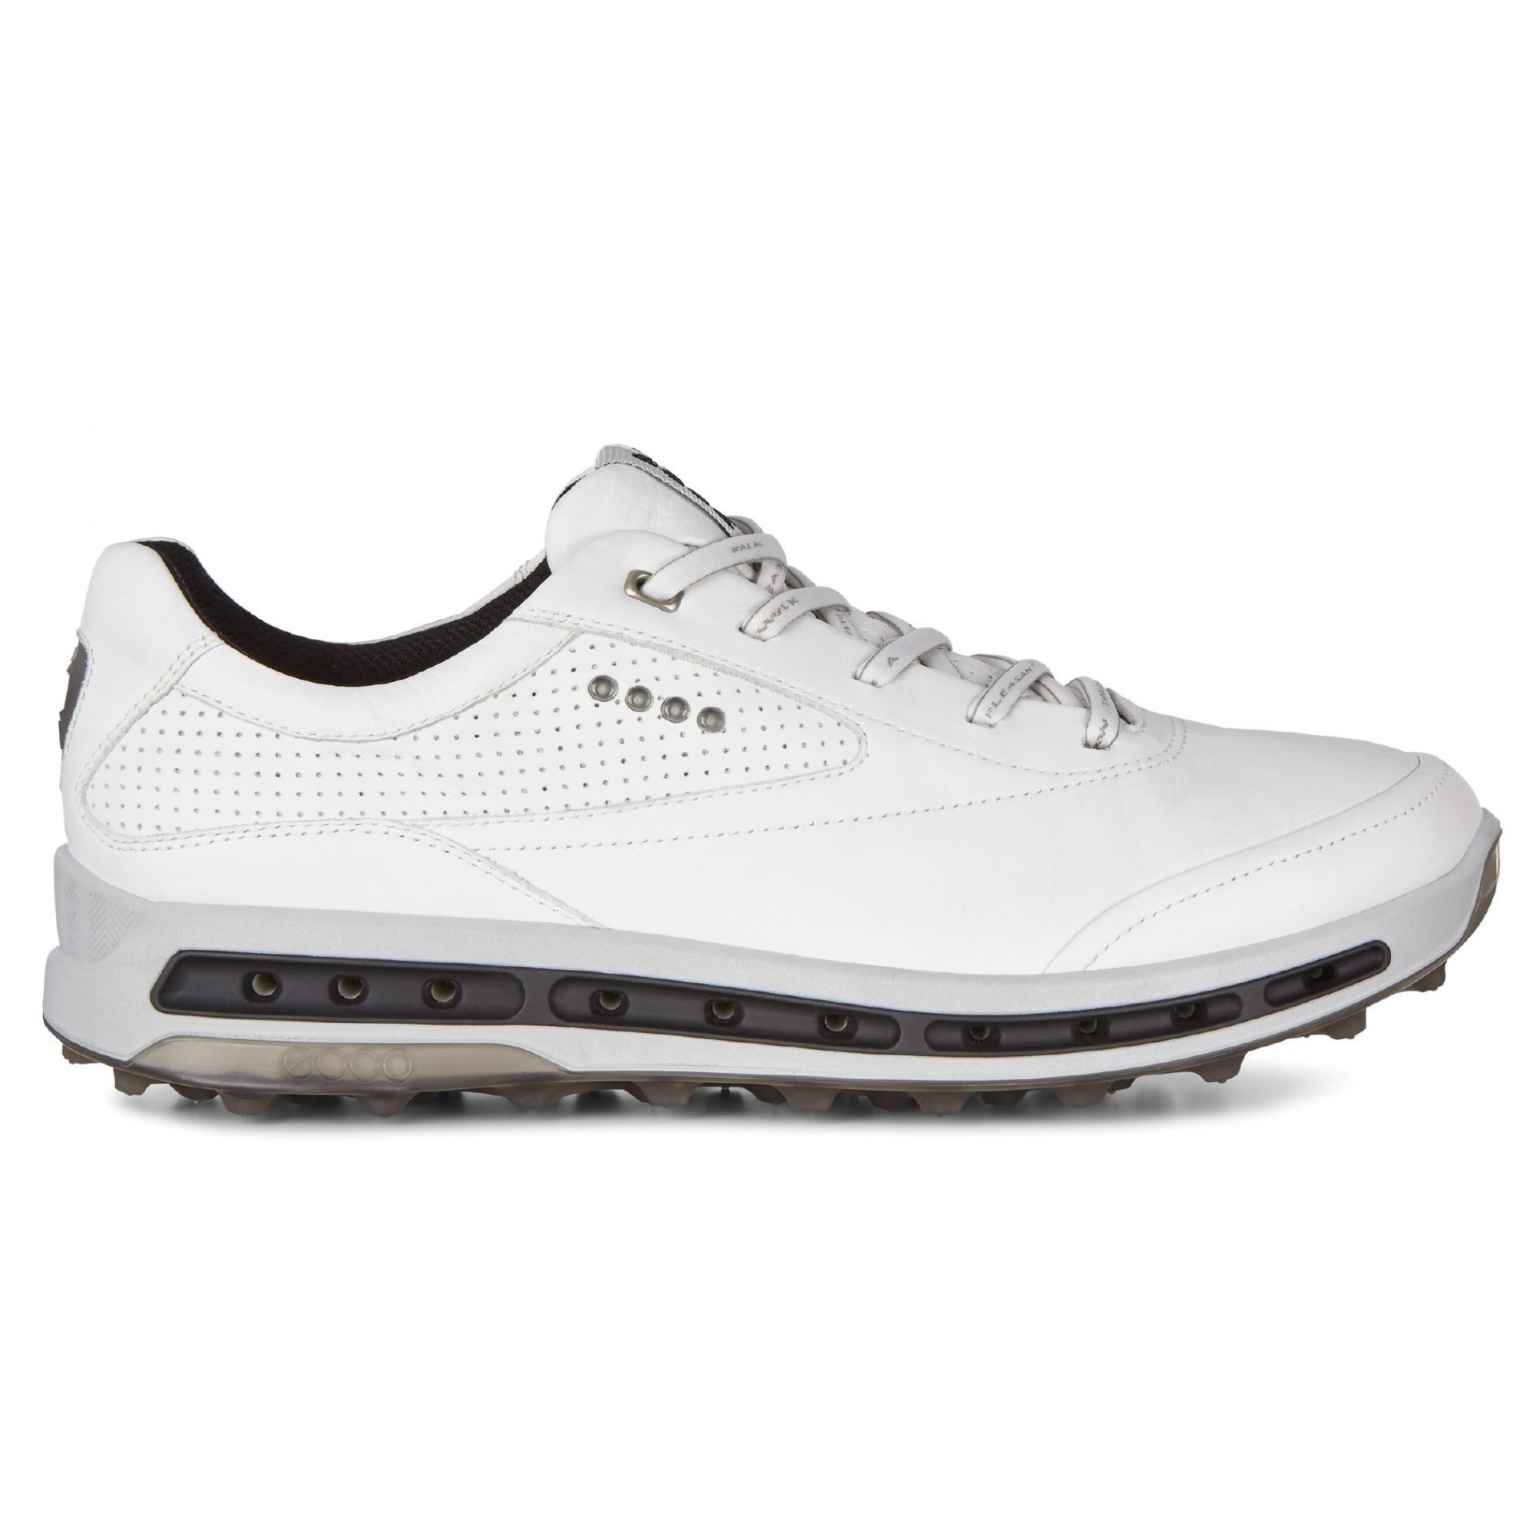 Ecco ECCO Cool Pro golf shoe review | Footwear Reviews | GolfMagic